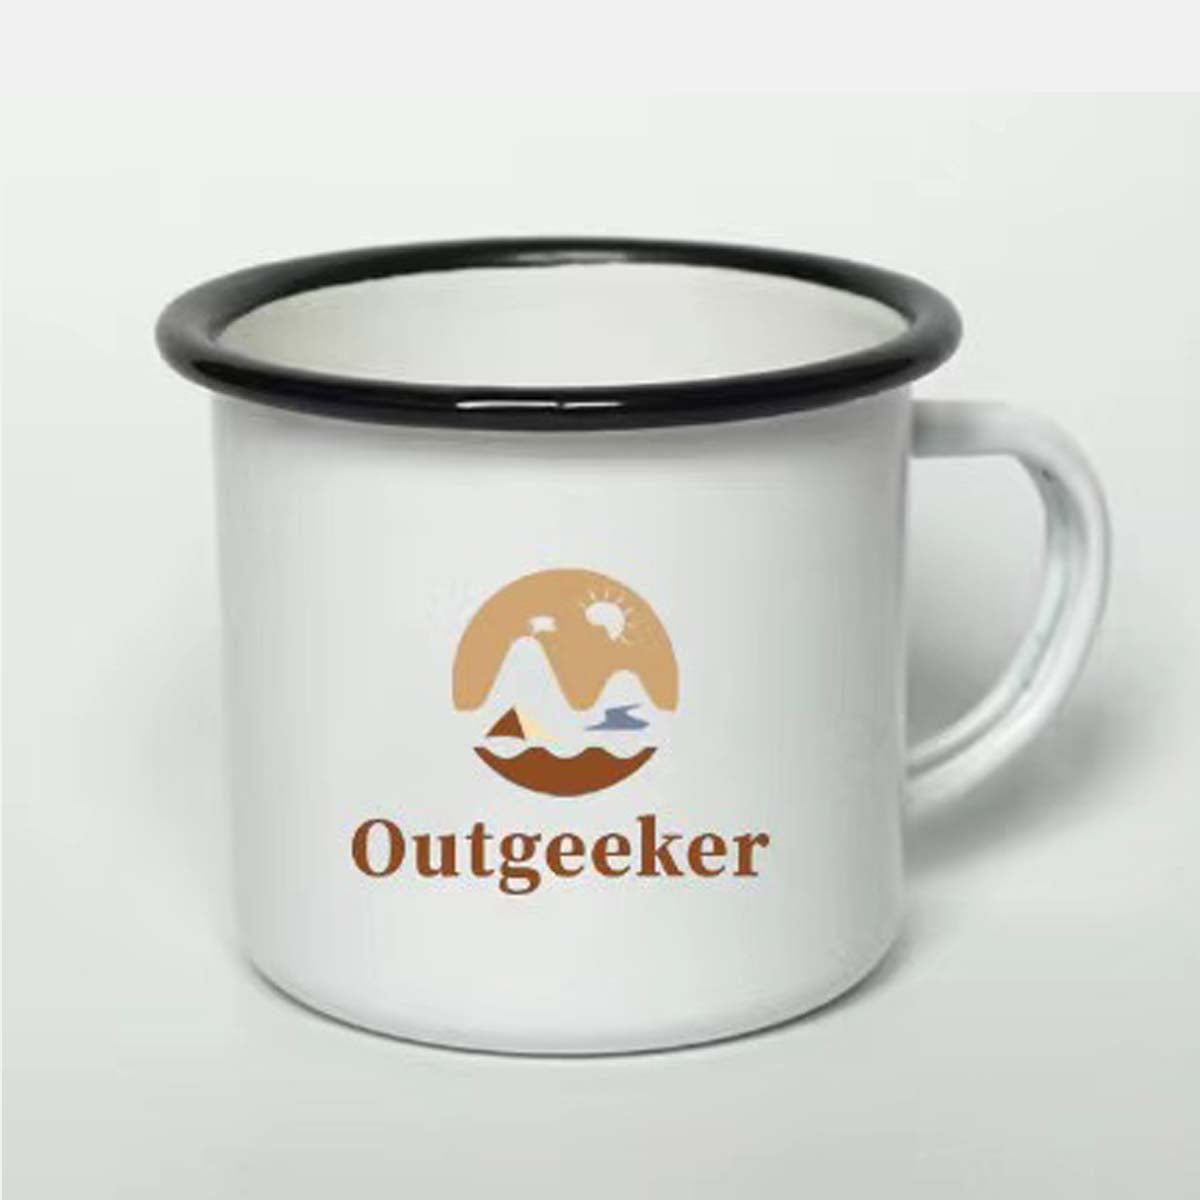 Outgeeker Outdoor Camping Enamel Mug